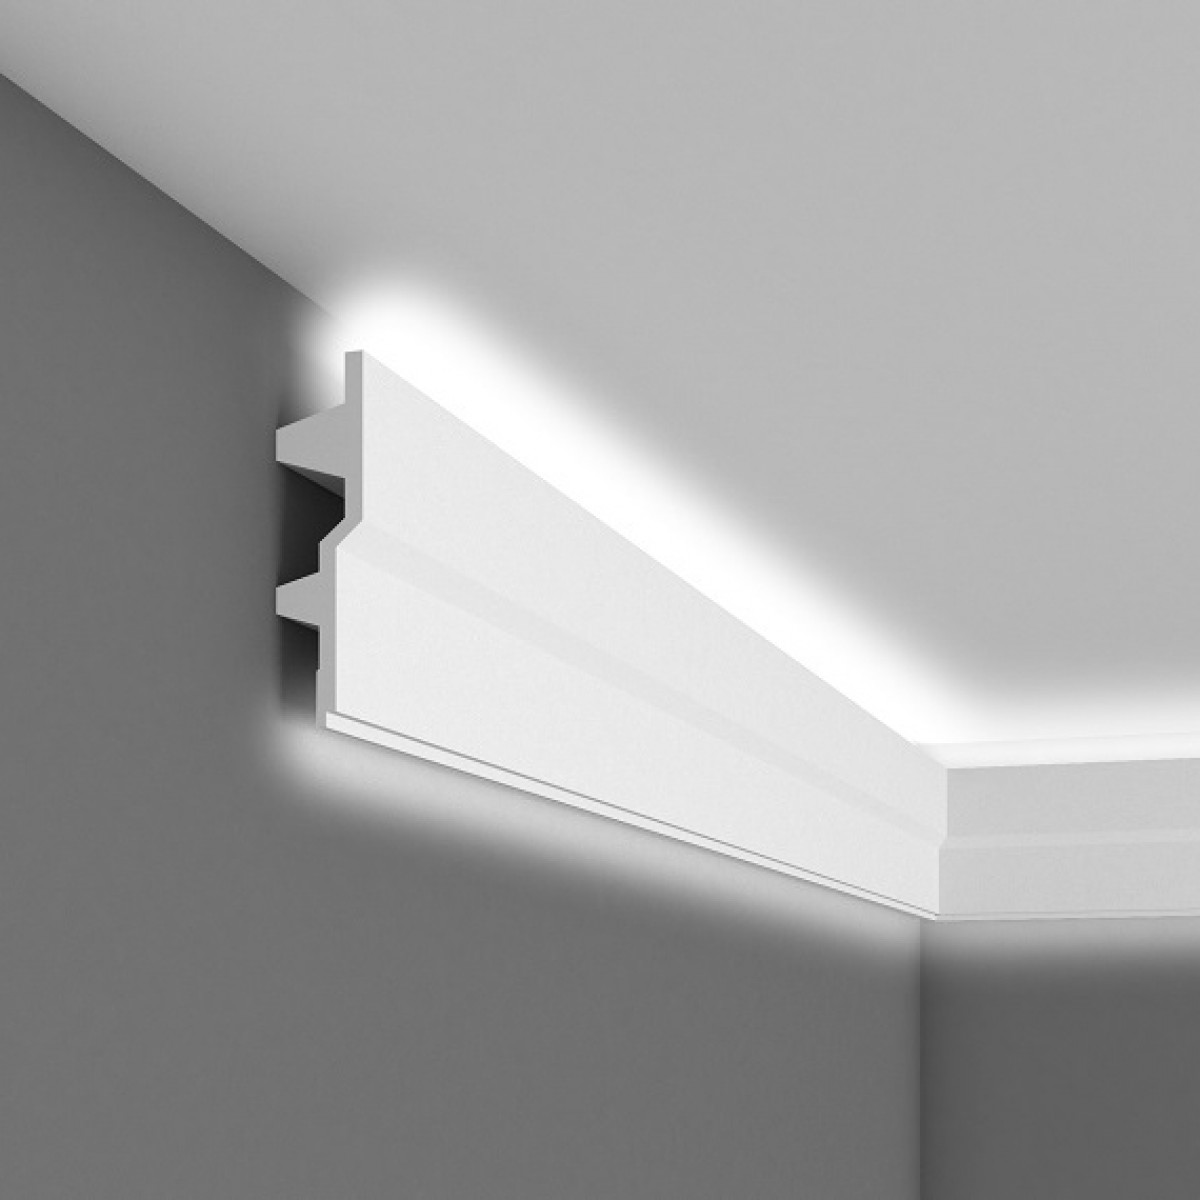 Scafe tavan (iluminat indirect, LED) Mardom Decor MRD-MDB150, material: ProFoam